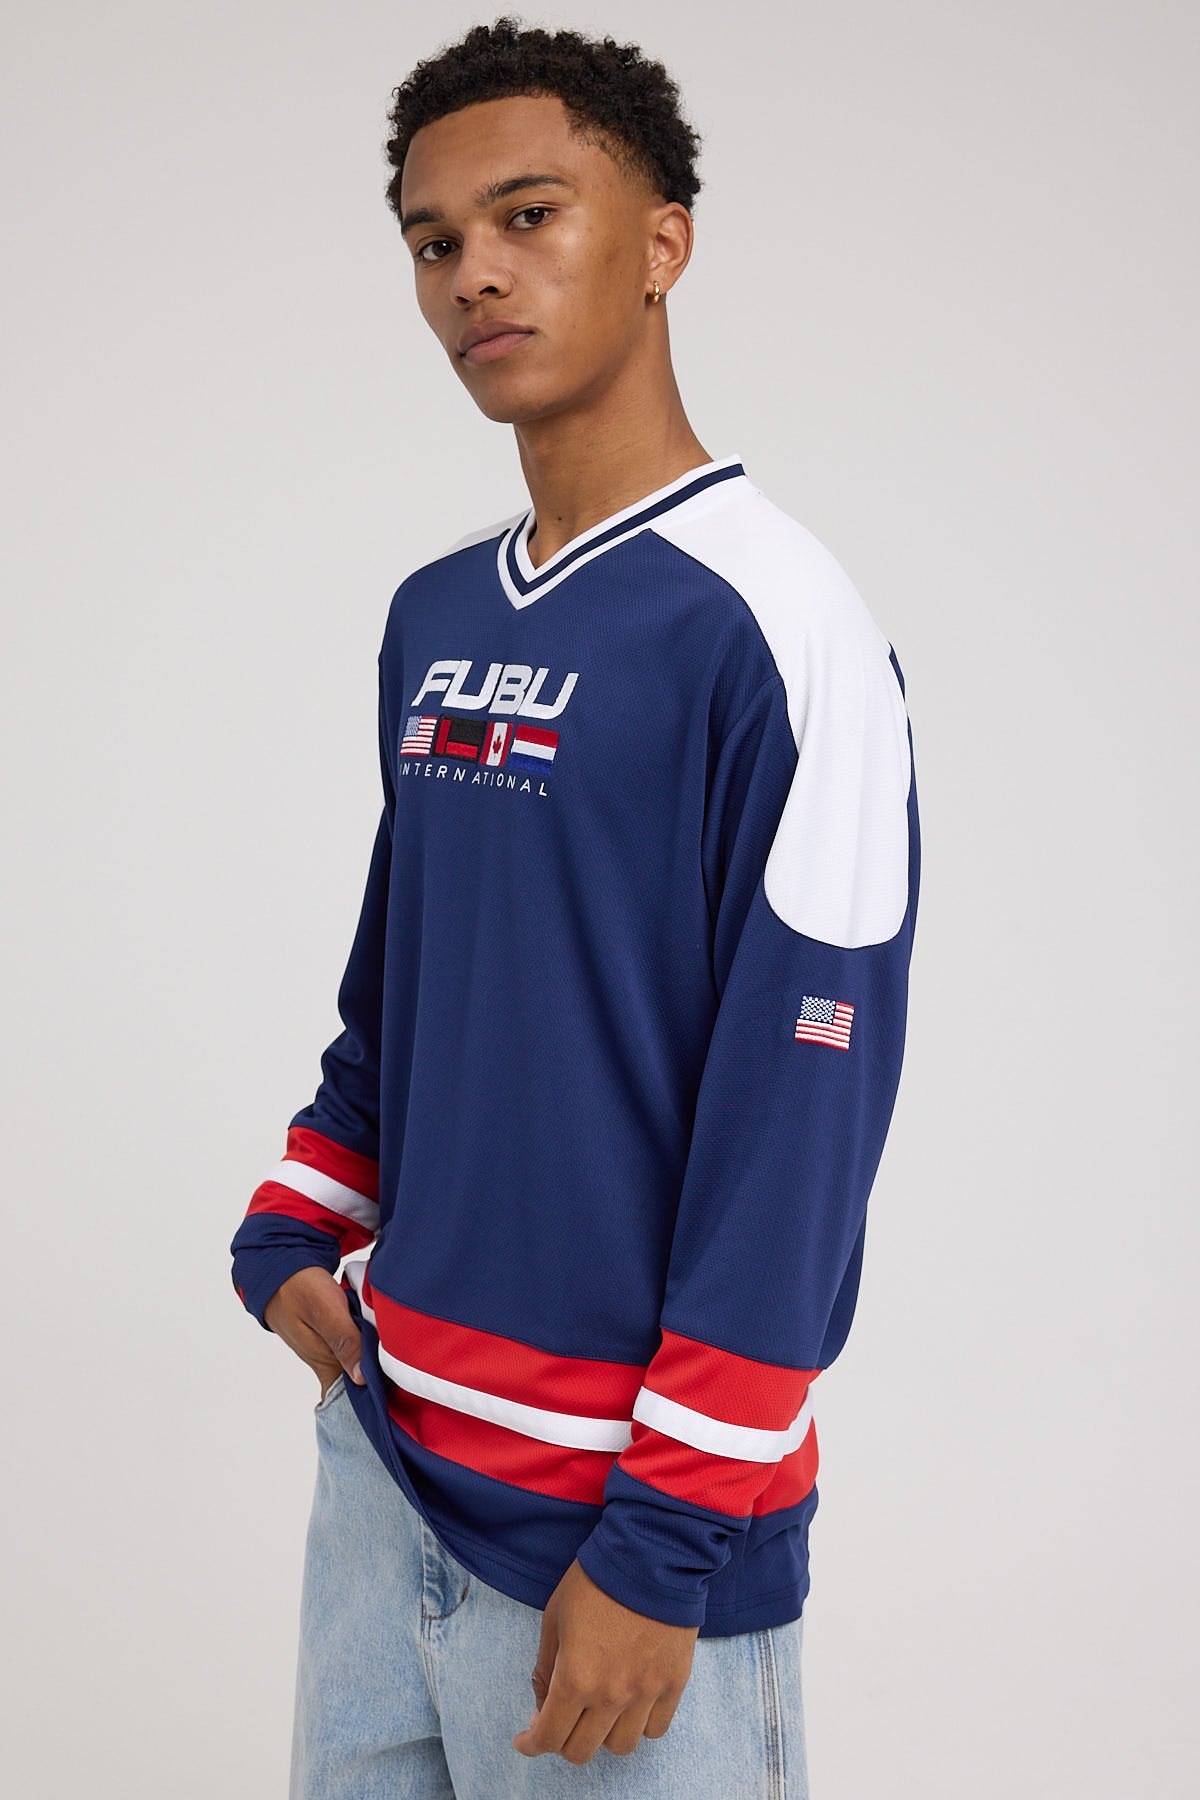 Fubu Corporate Hockey Jersey Navy/White